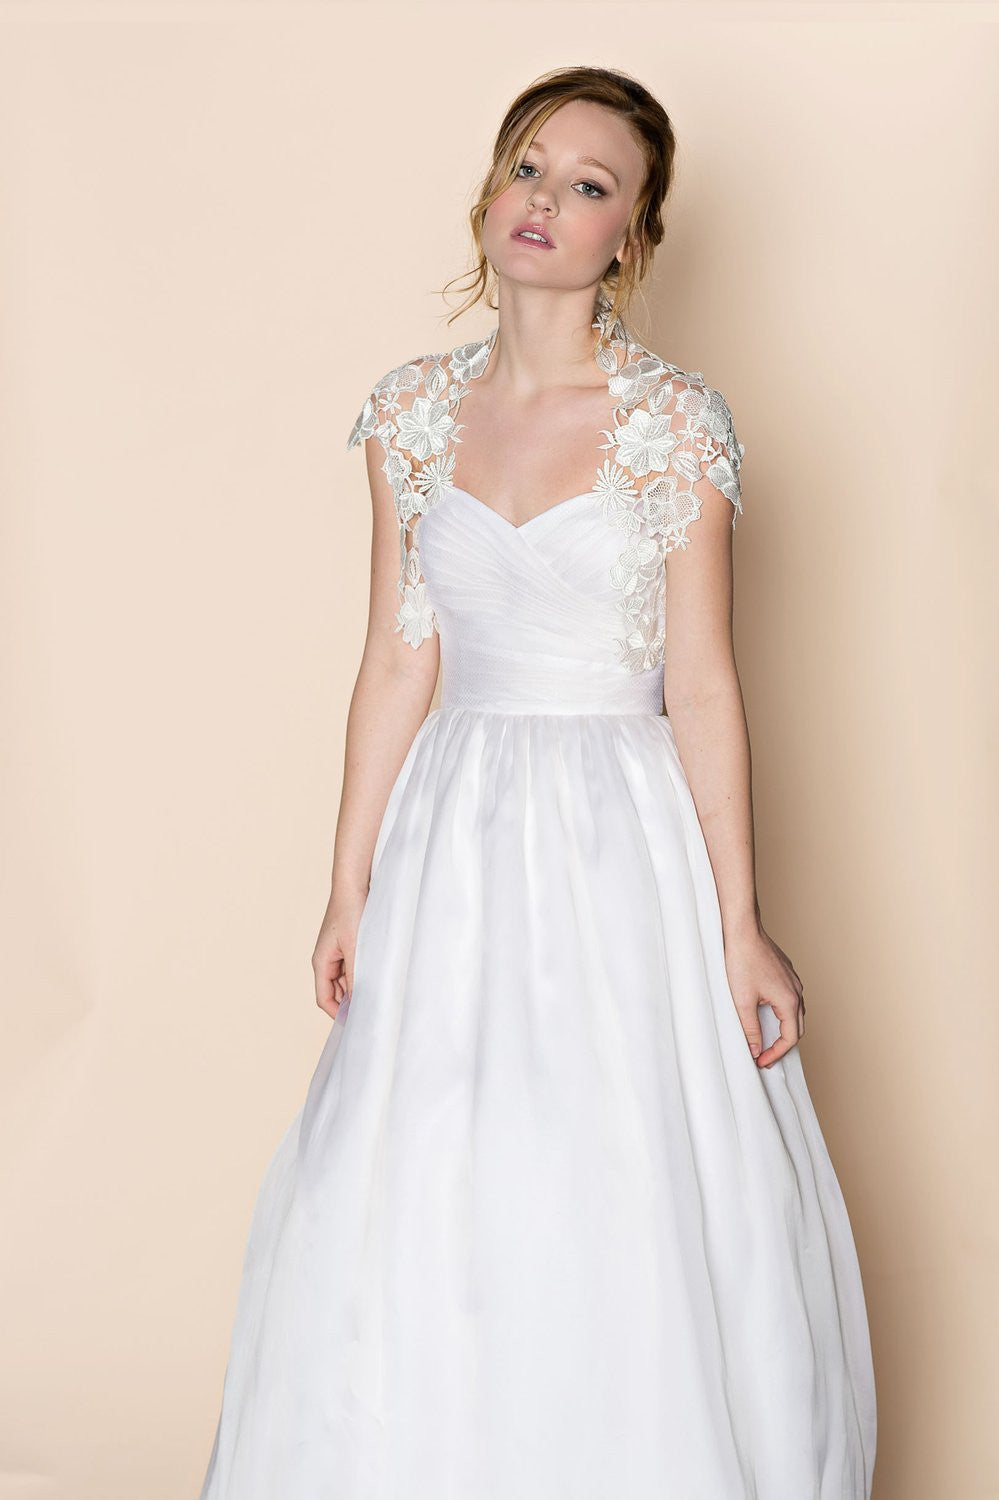 Krista Italian Lace Long Sleeve Bolero in Ivory Floral Applique off White  Bridal Shrug Elegant Wedding Jacket Cover Up Fine Guipure Lace 